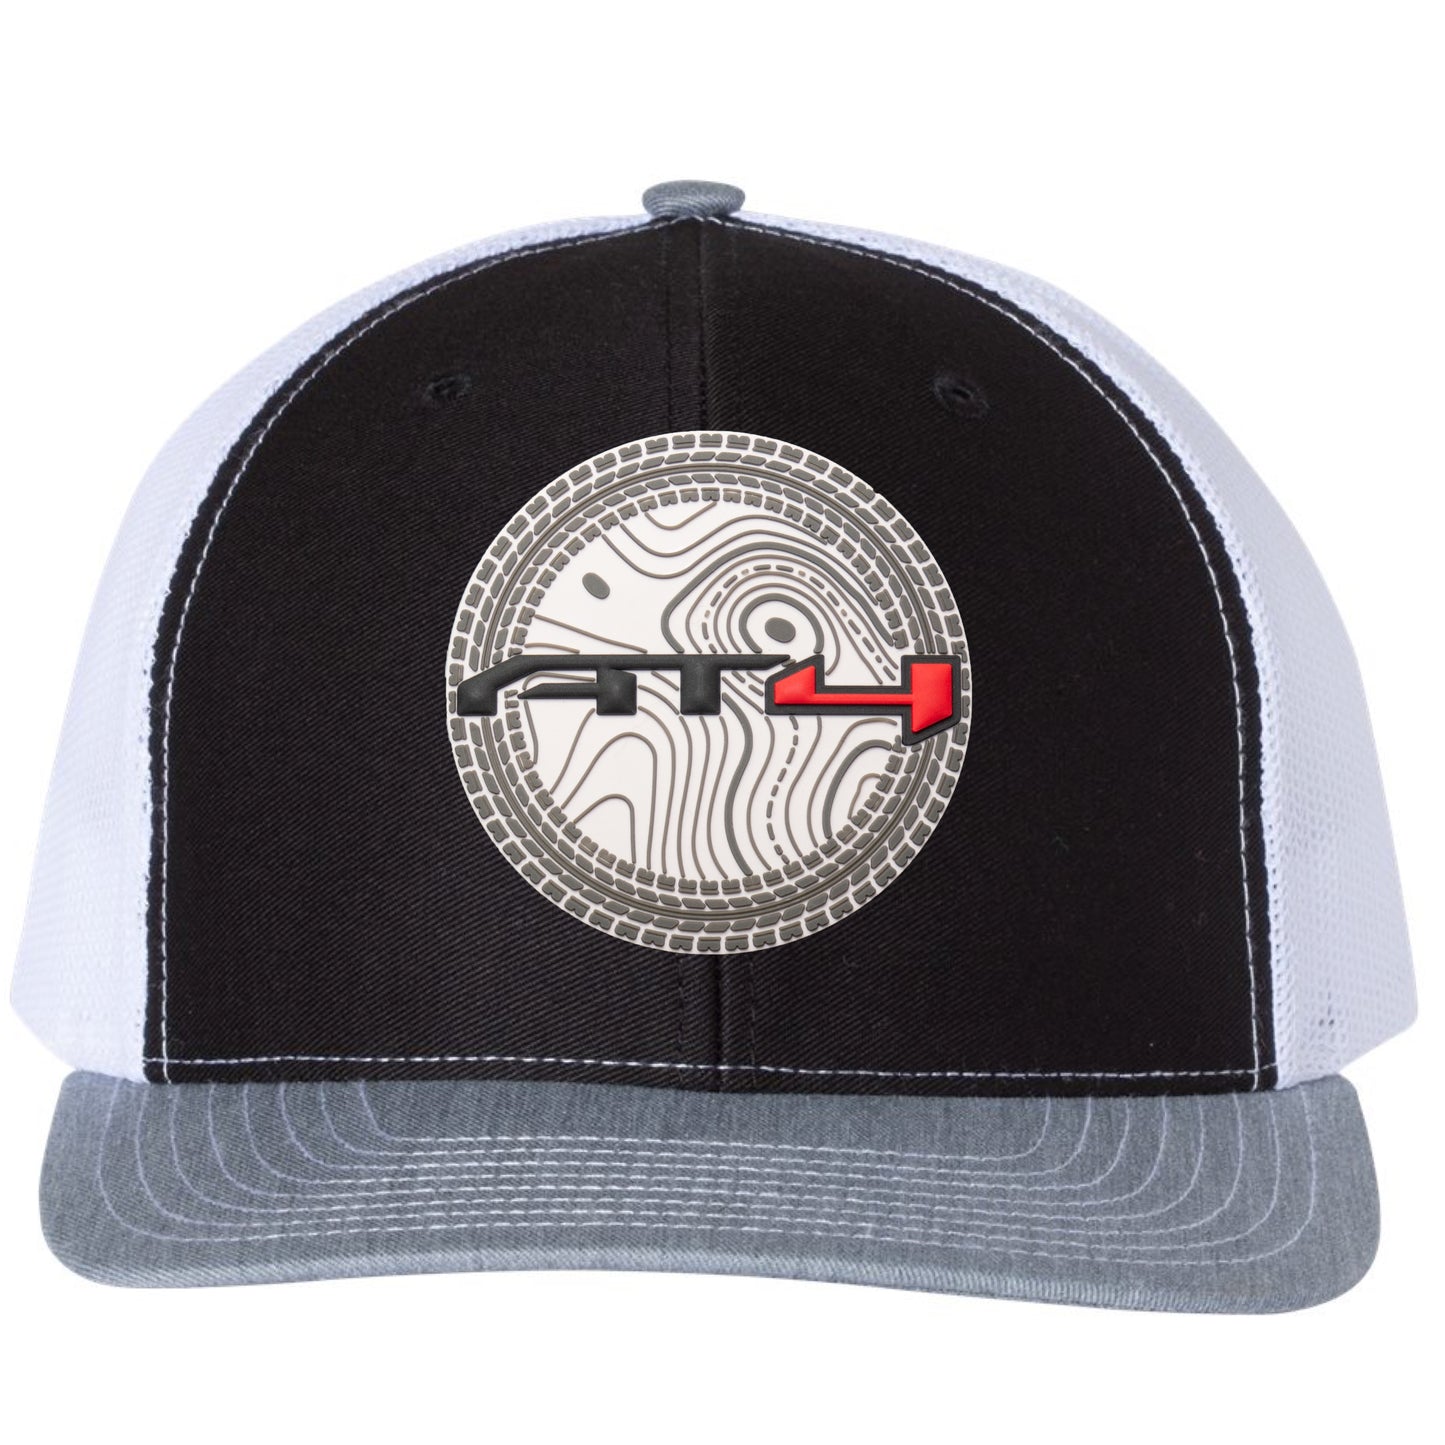 AT4 3D PVC Patch Snapback Trucker Hat- Black/ White/ Heather Grey - Ten Gallon Hat Co.